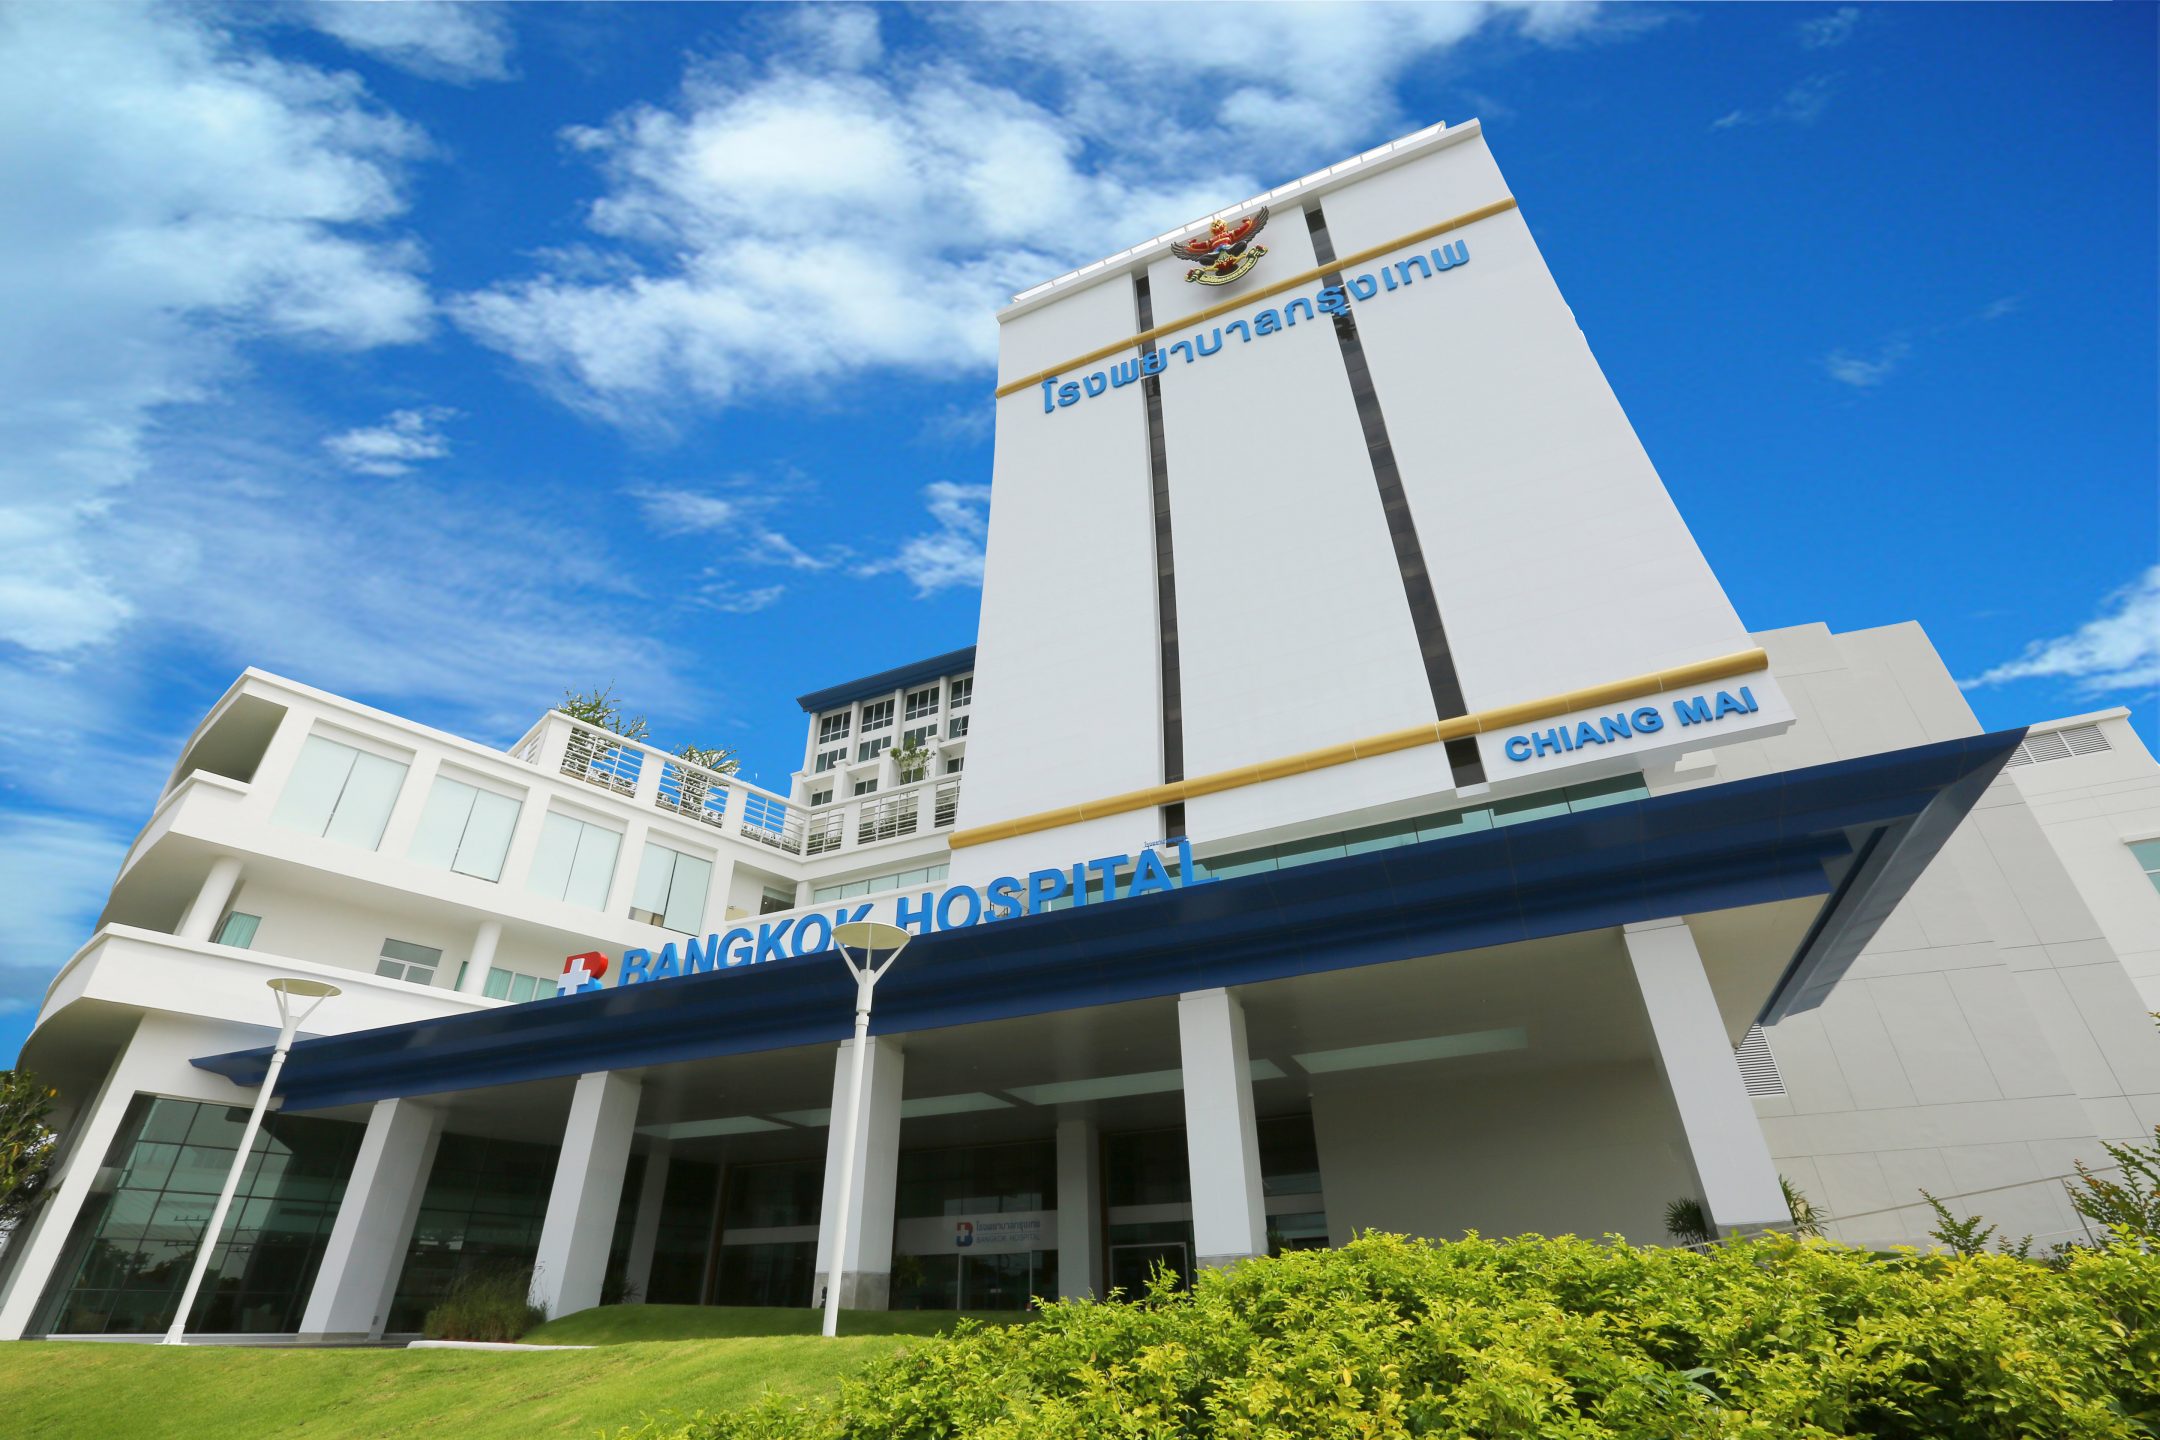 Bangkok Hospital Chiang Mai